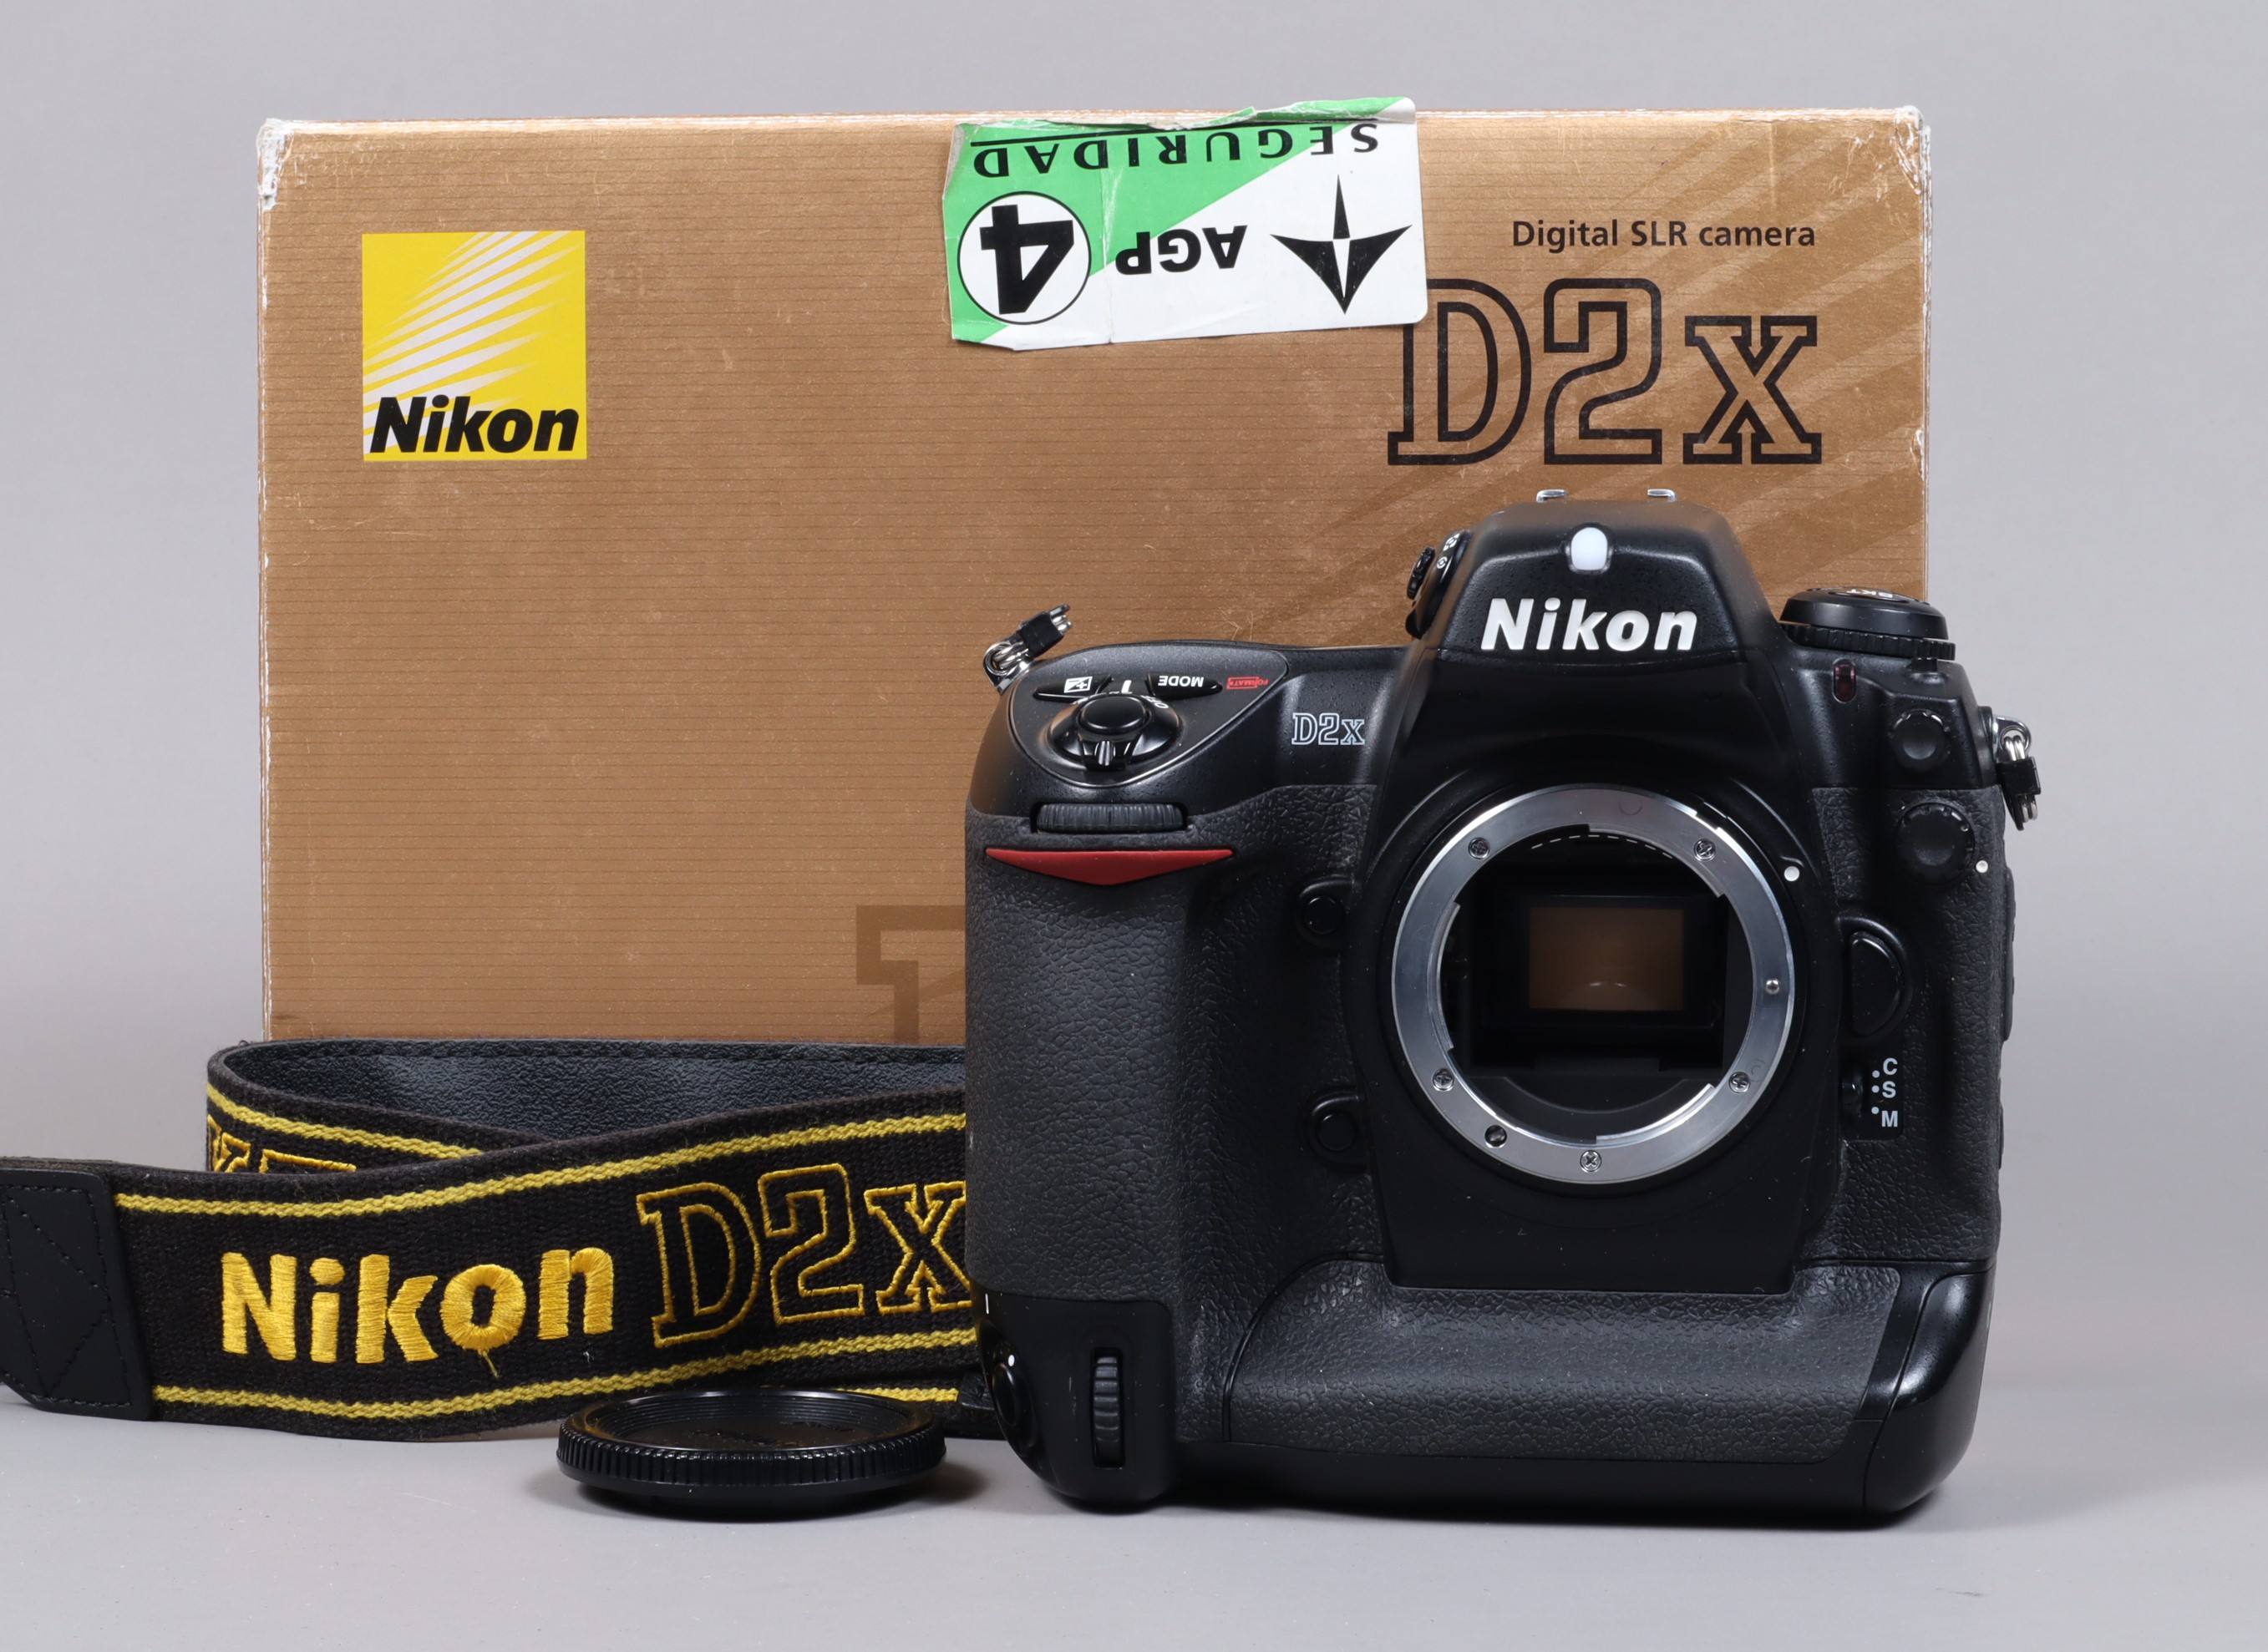 A Nikon D2x DSLR Camera Body, serial no 5043913, body G, light wear, with body cap, strap, manual,